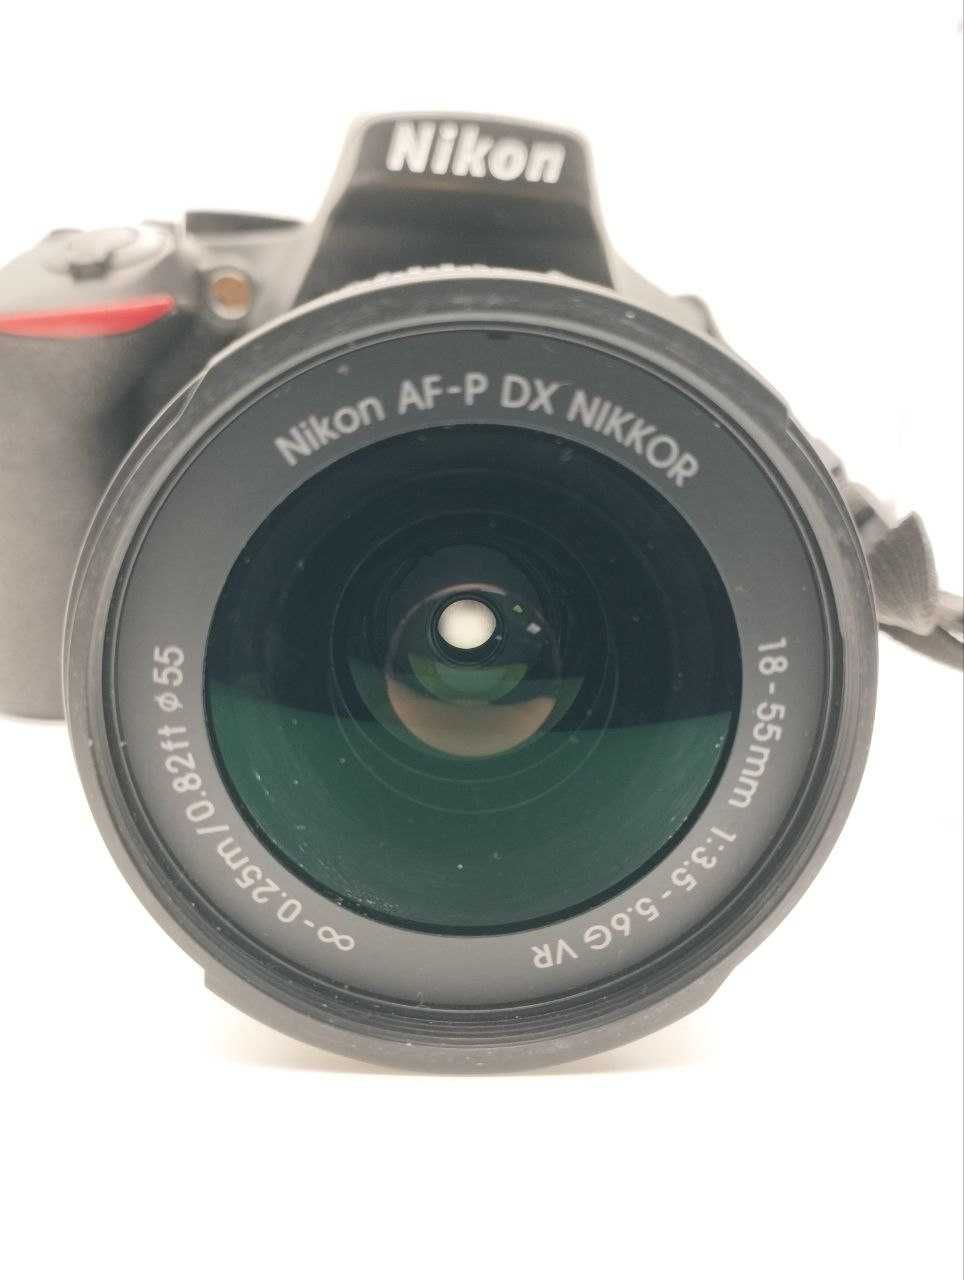 Фотоапарат Nikon D3500 + Nikkor 18-55mm